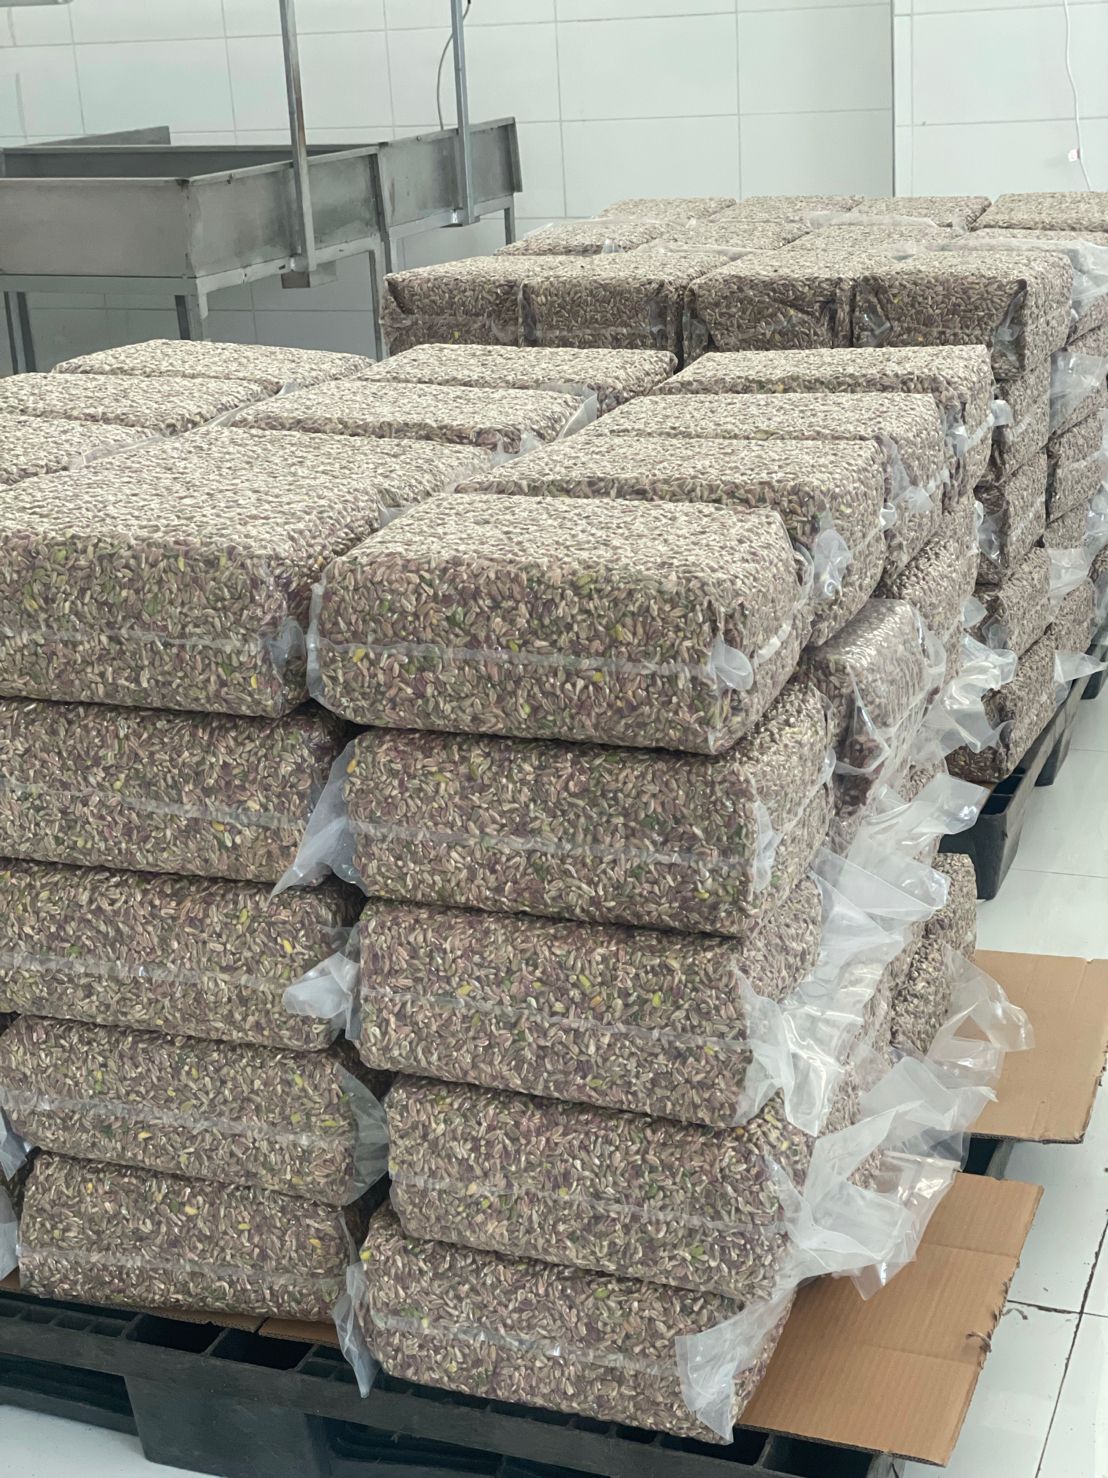 The production process of Nutex pistachio nuts - Nutex pistachio company